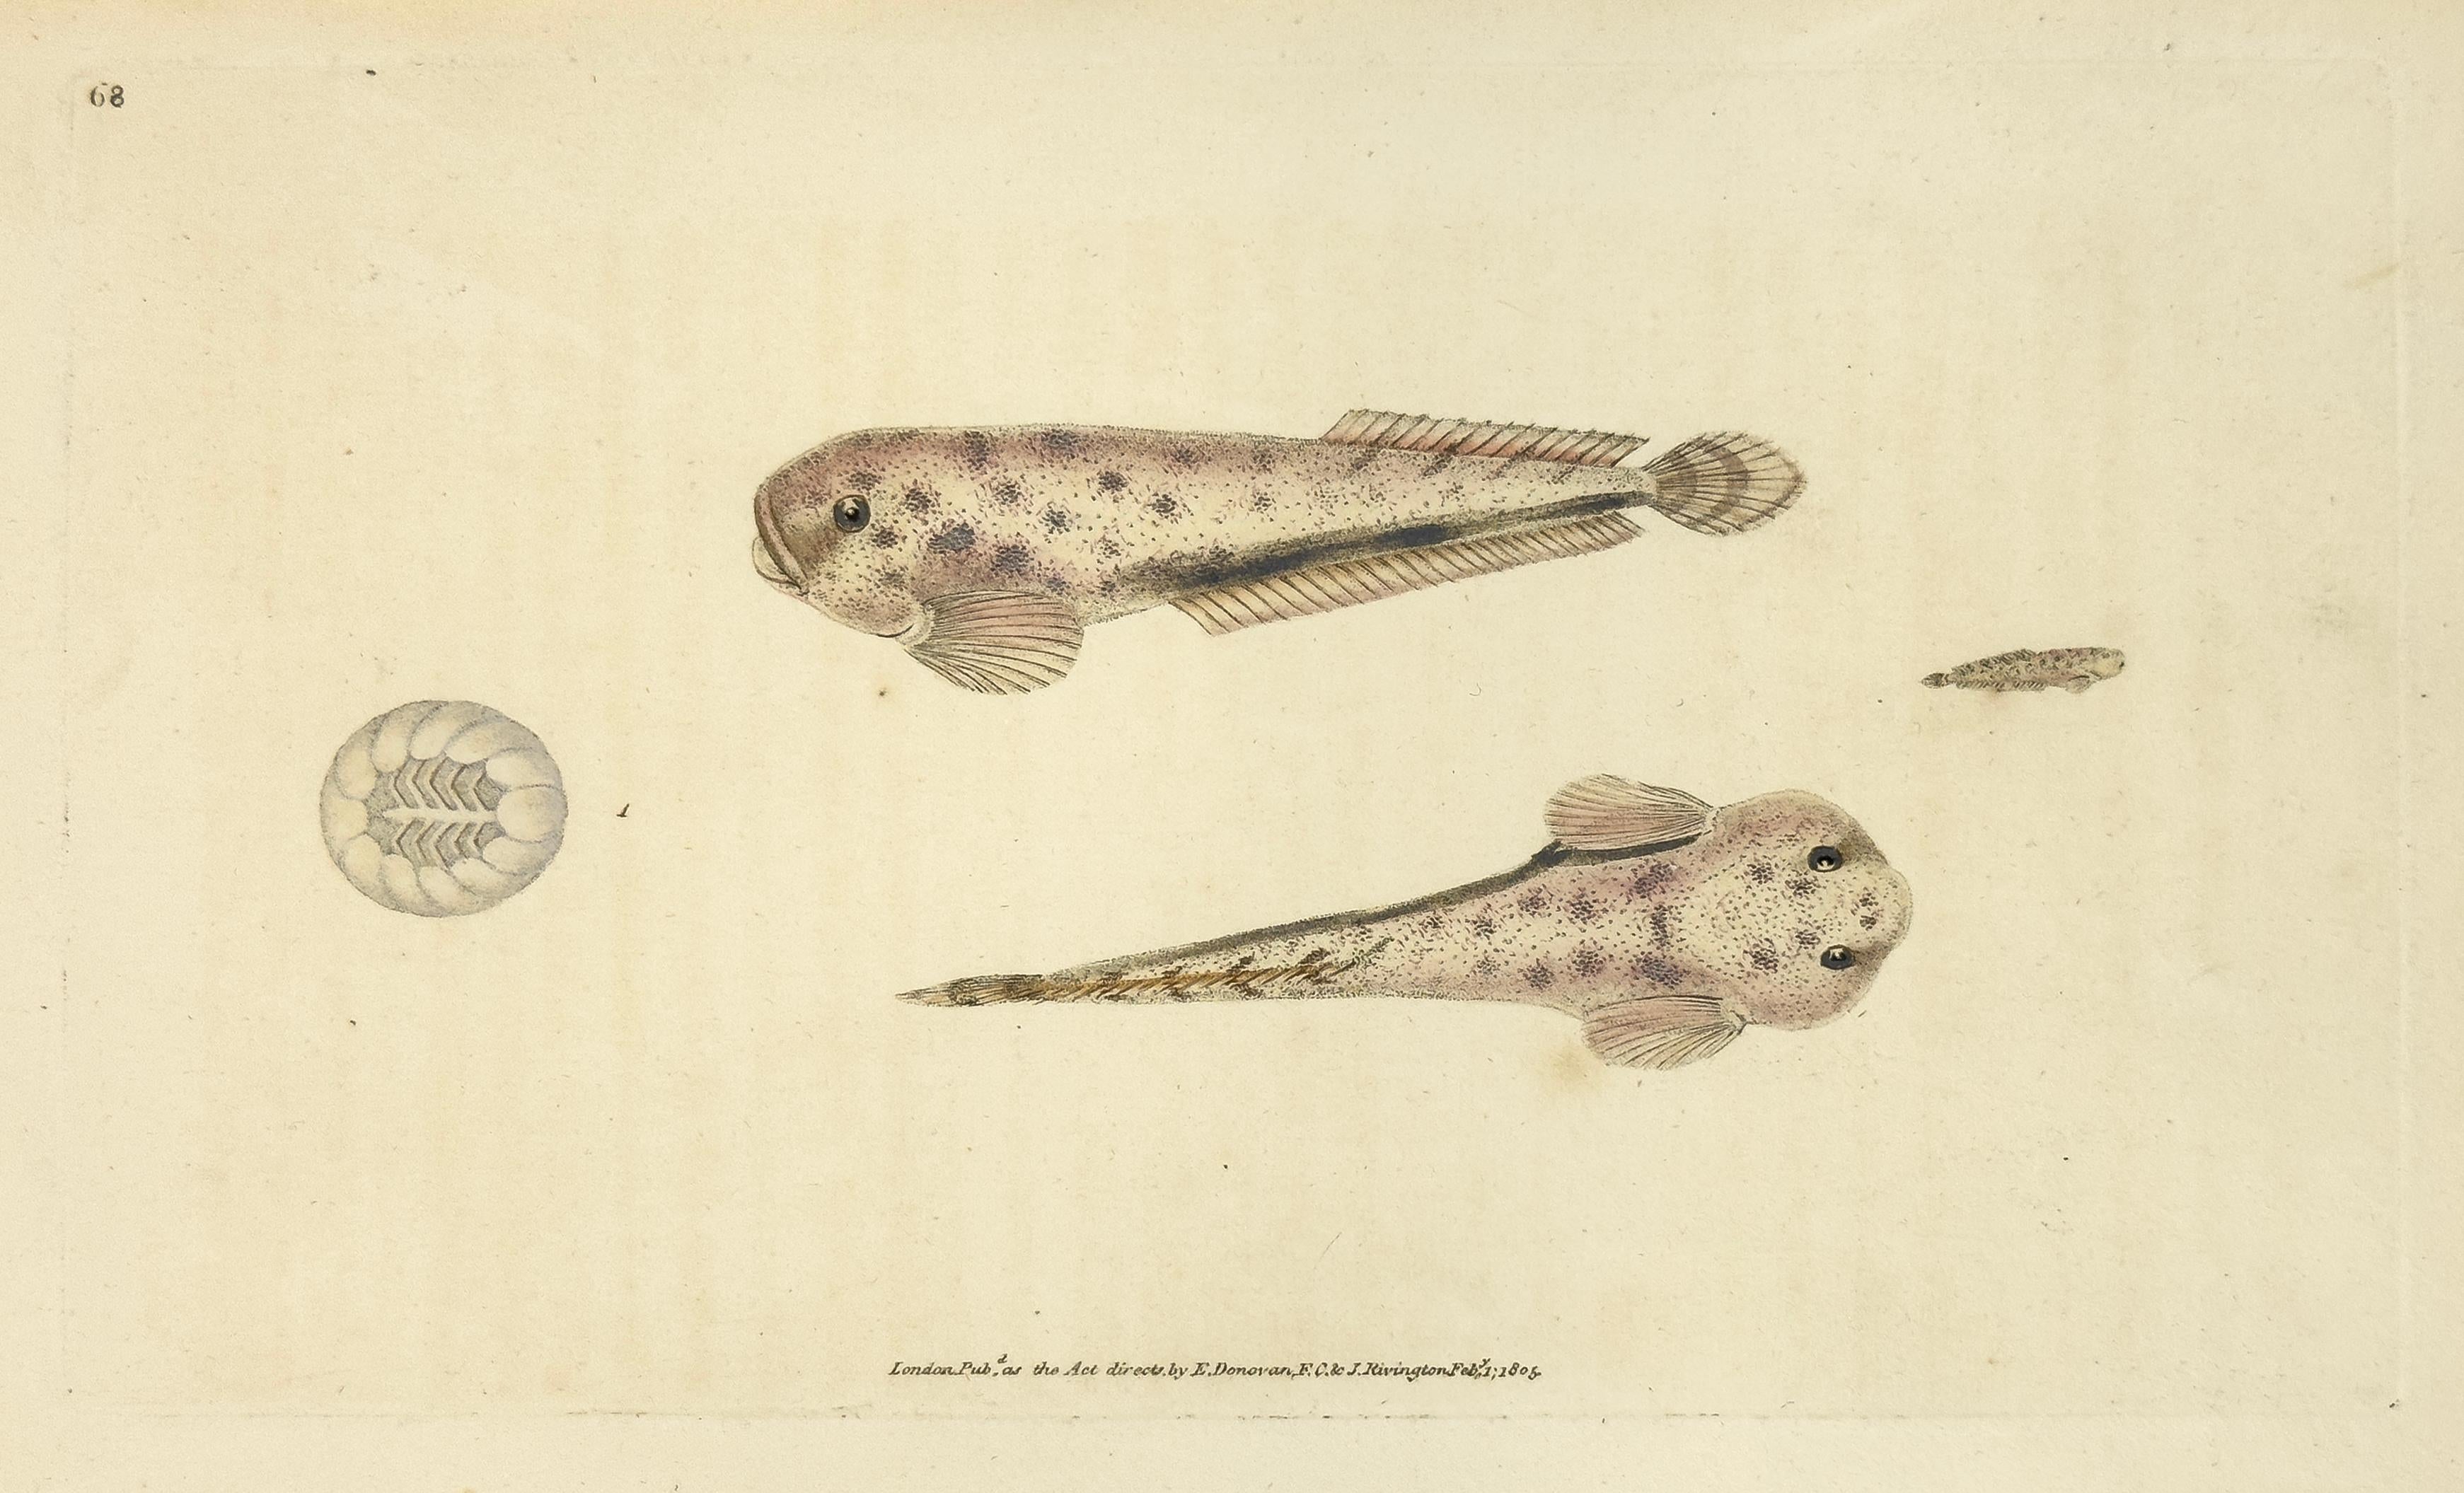 Edward Donovan Animal Print - 68: Cyclopterus montagui, Diminuative Lump-Sucker